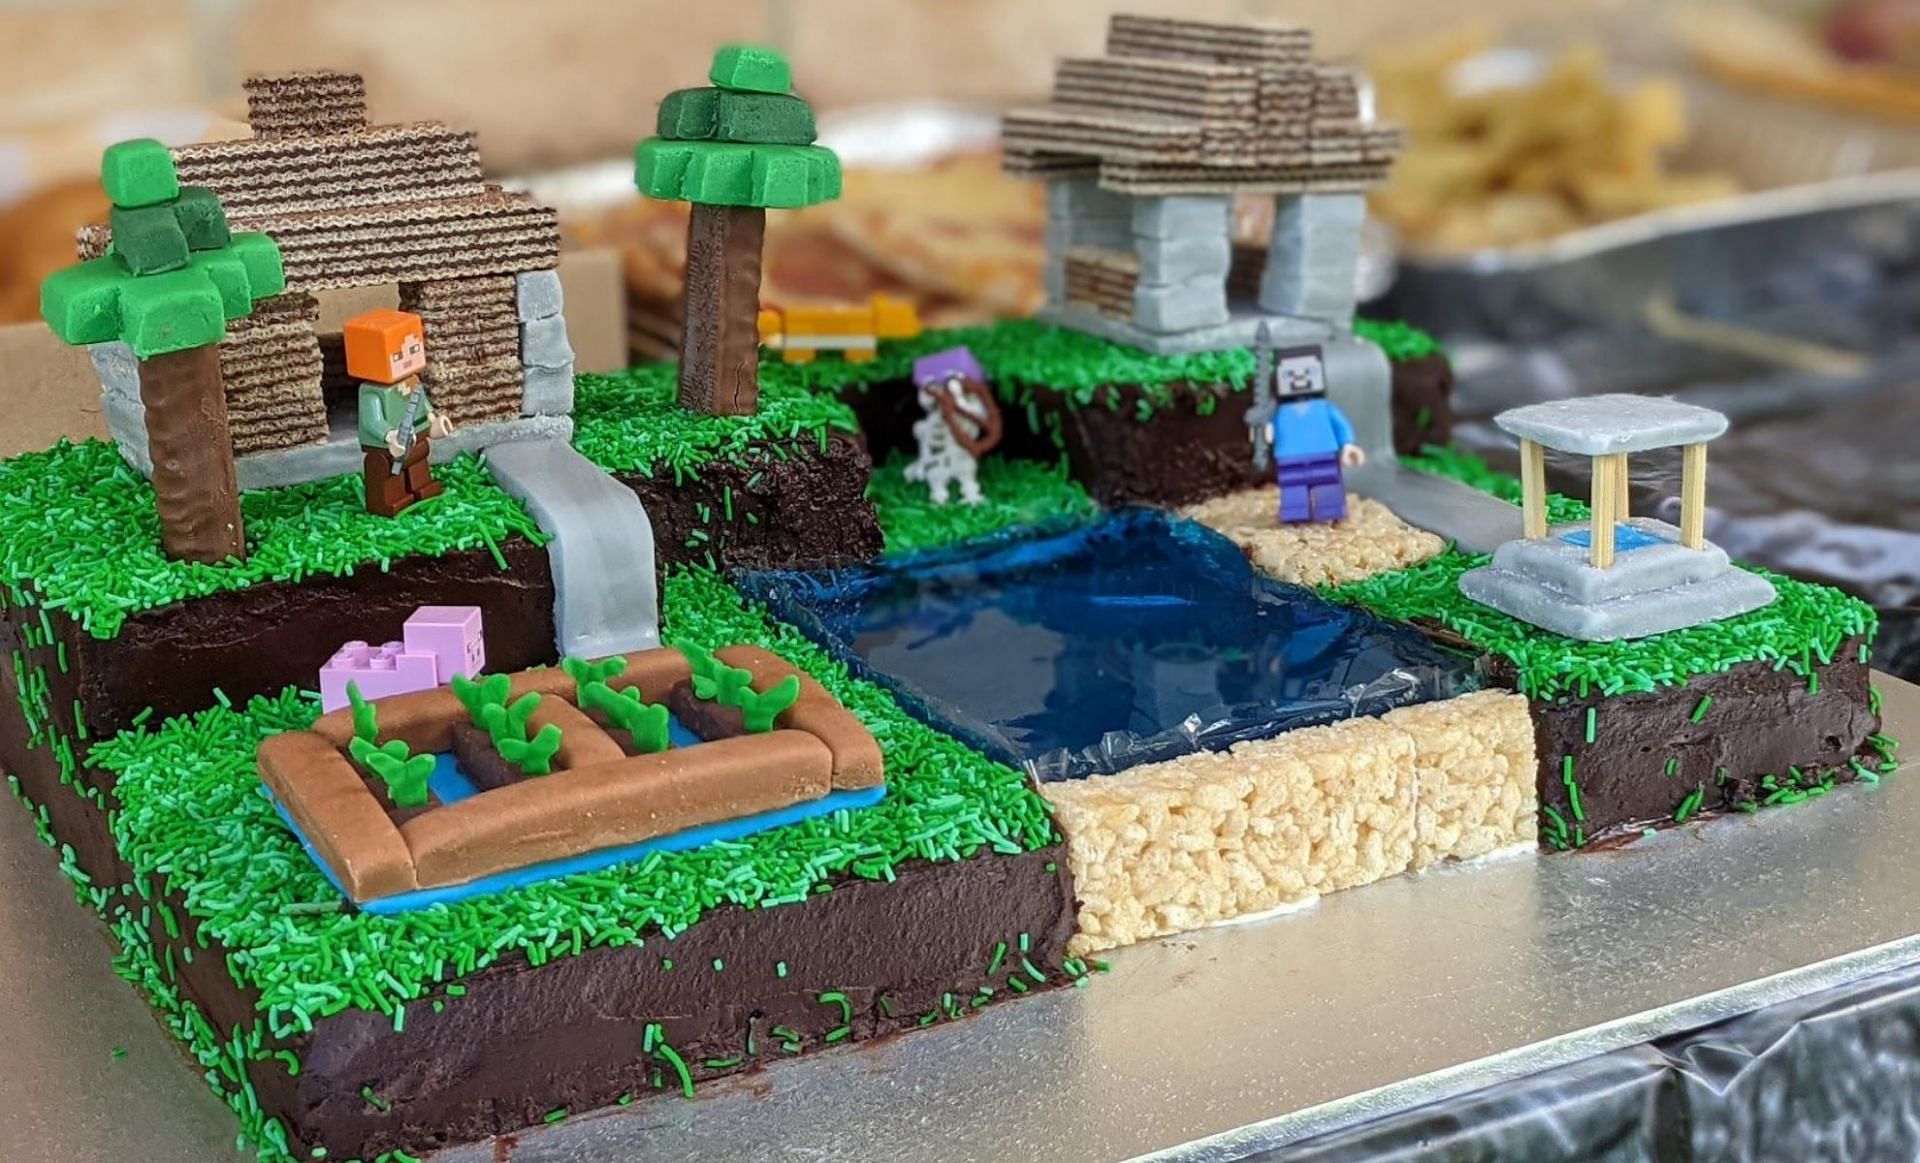 Top 35 BEST Minecraft Cake Ideas - eXputer.com